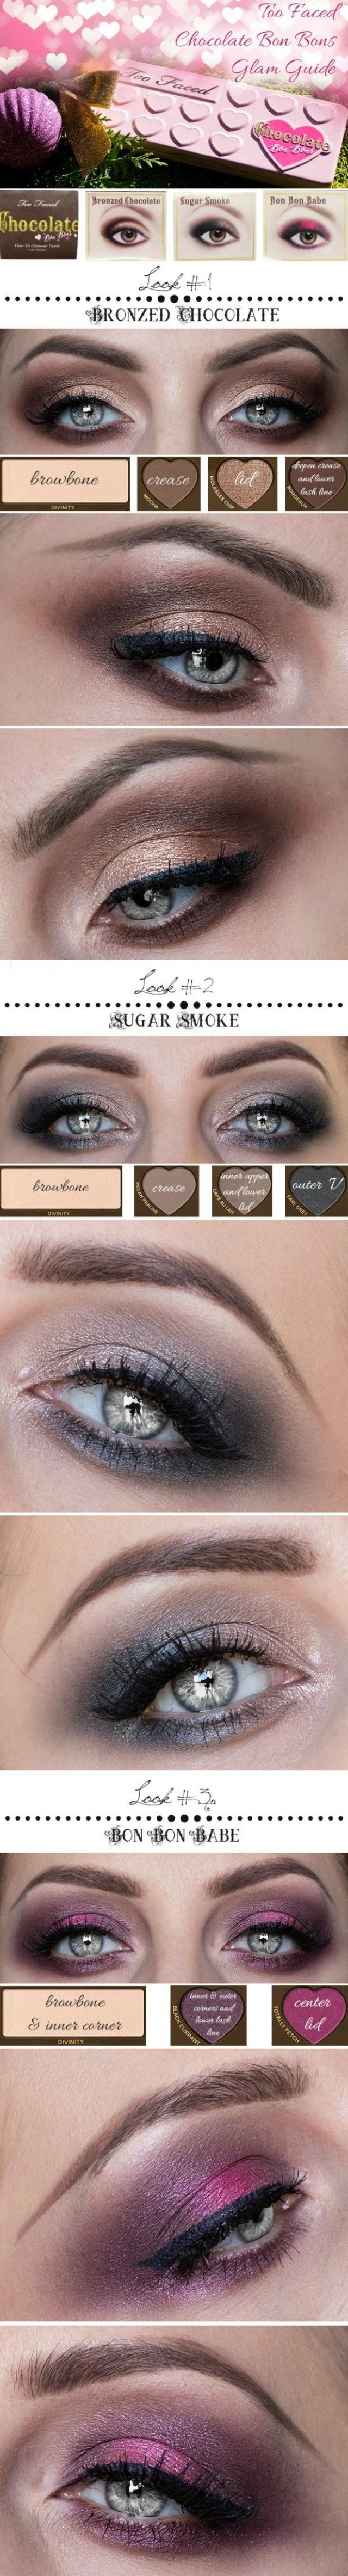 Makeup - Too Faced Chocolate Bon Bons Glam Guide #2703309 - Weddbook